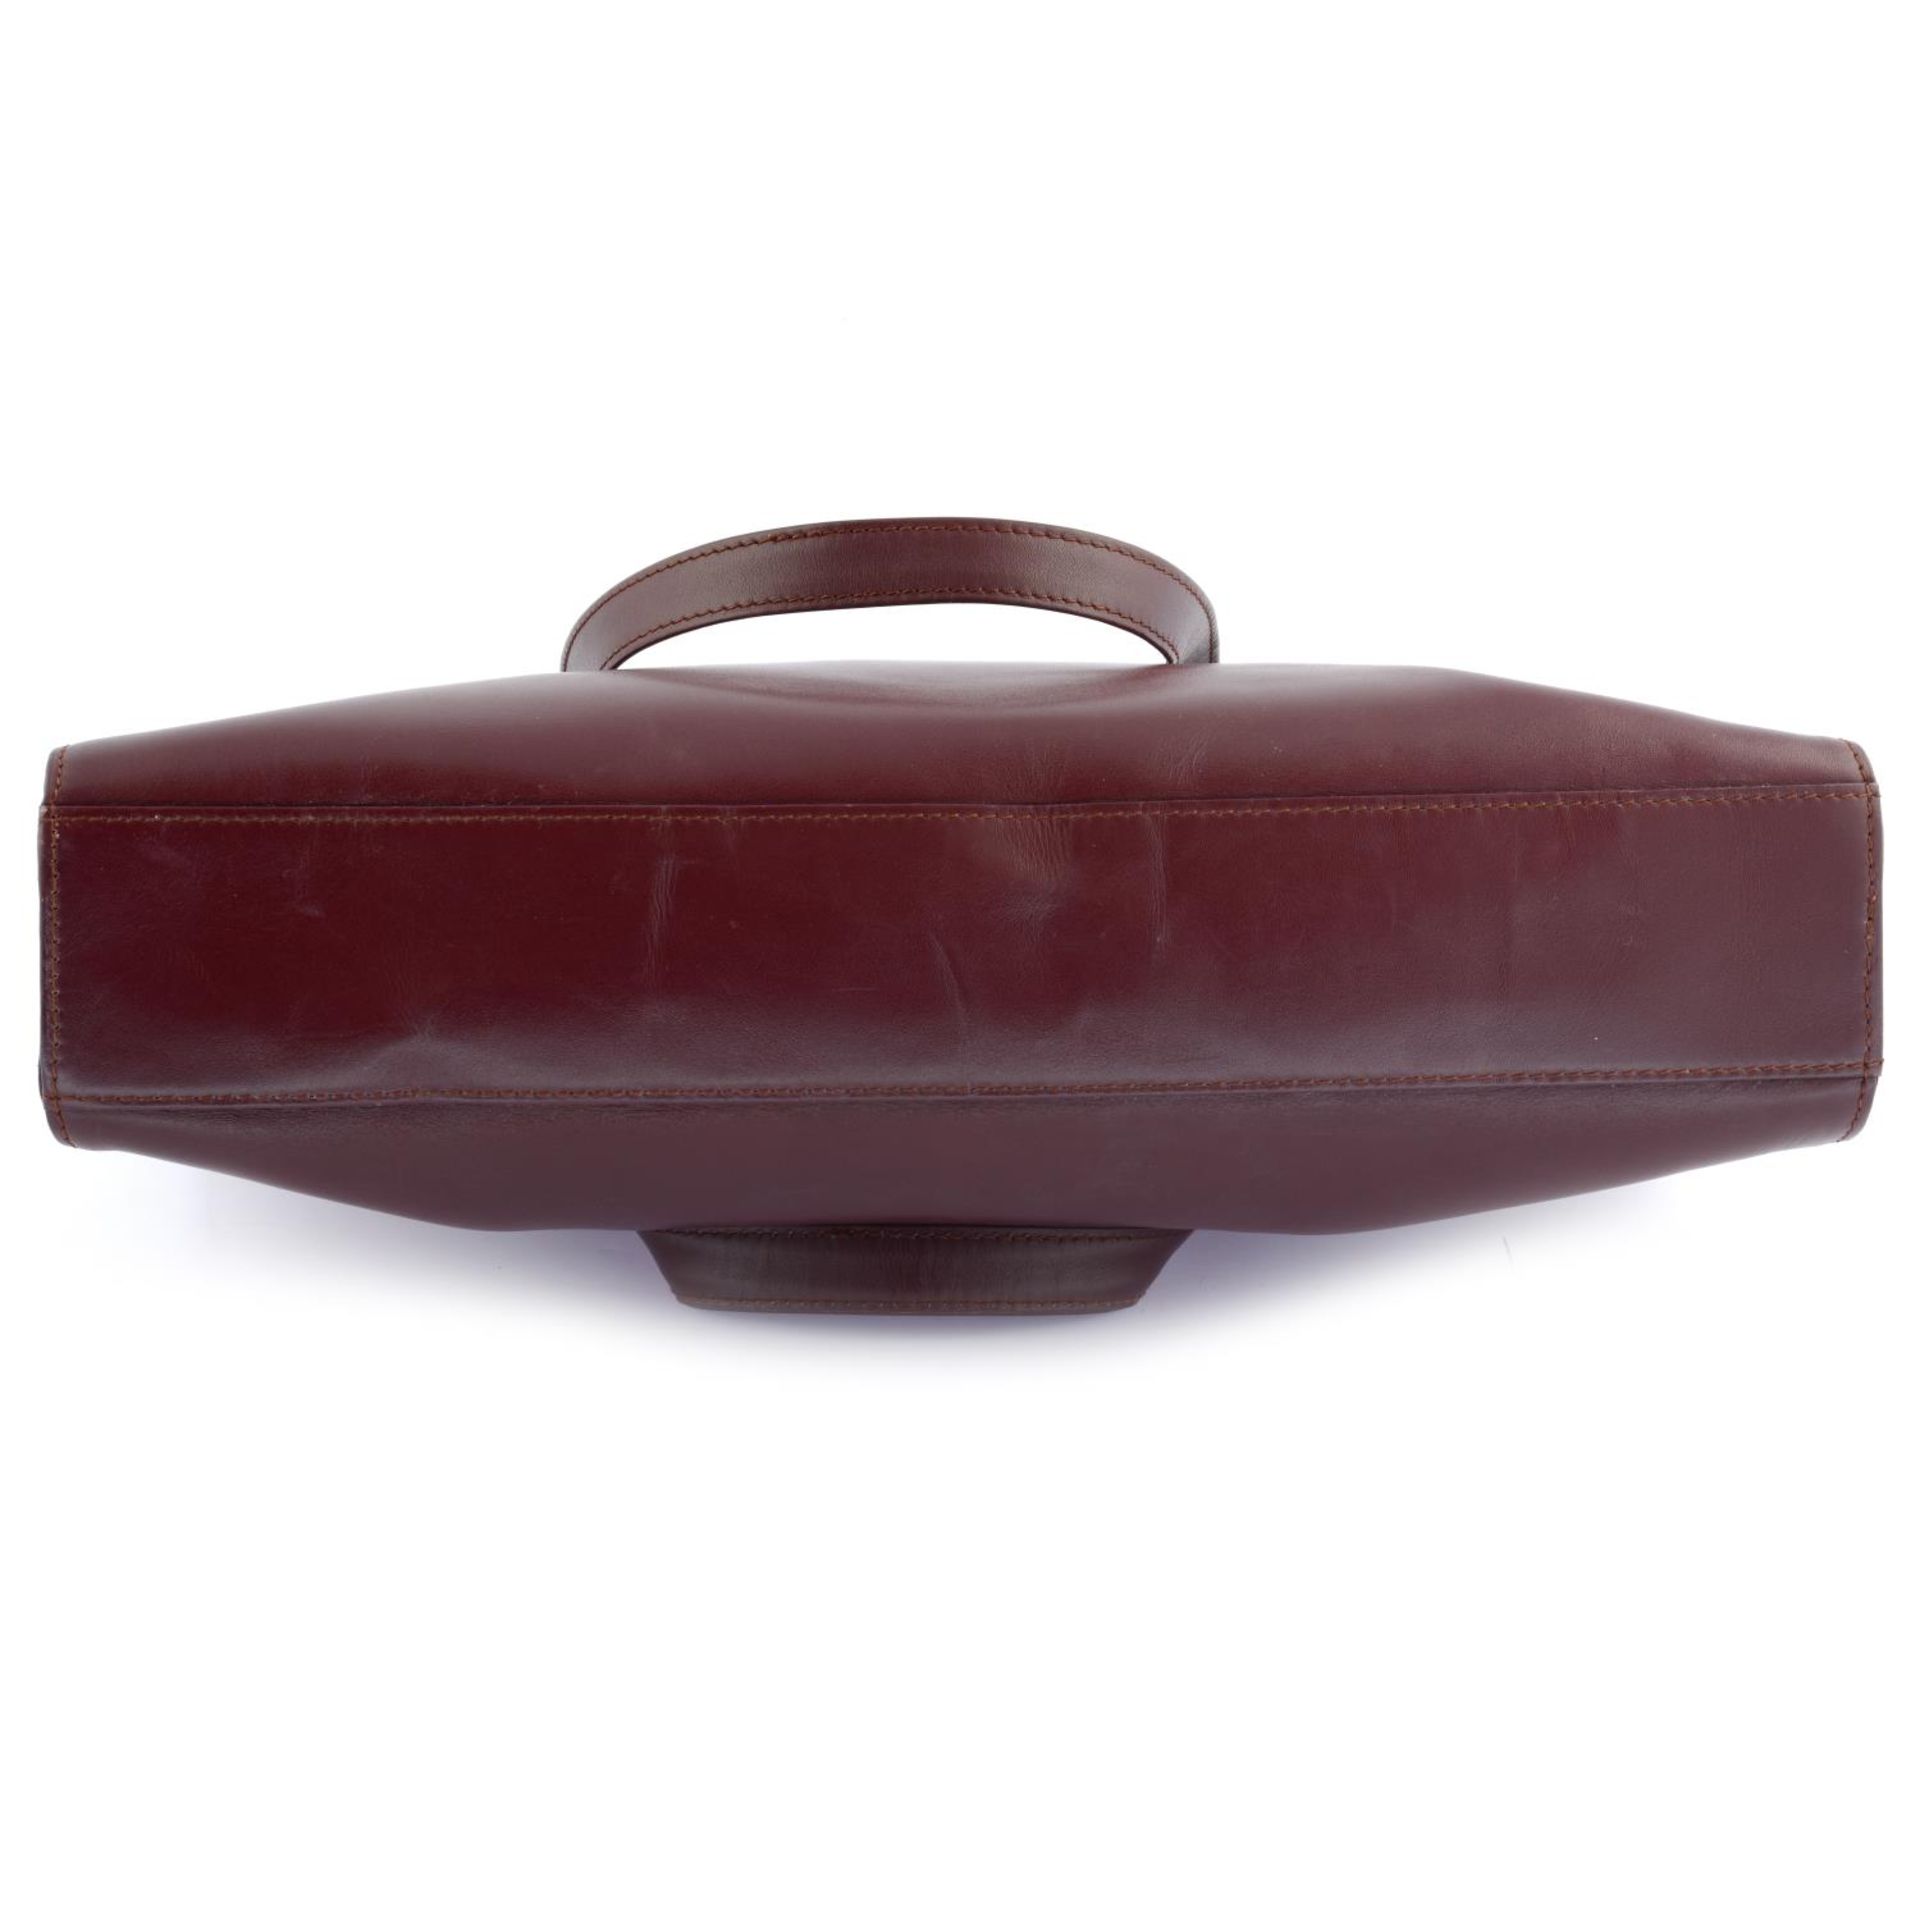 CARTIER - a burgundy leather Vintage Shopper handbag. - Bild 4 aus 4